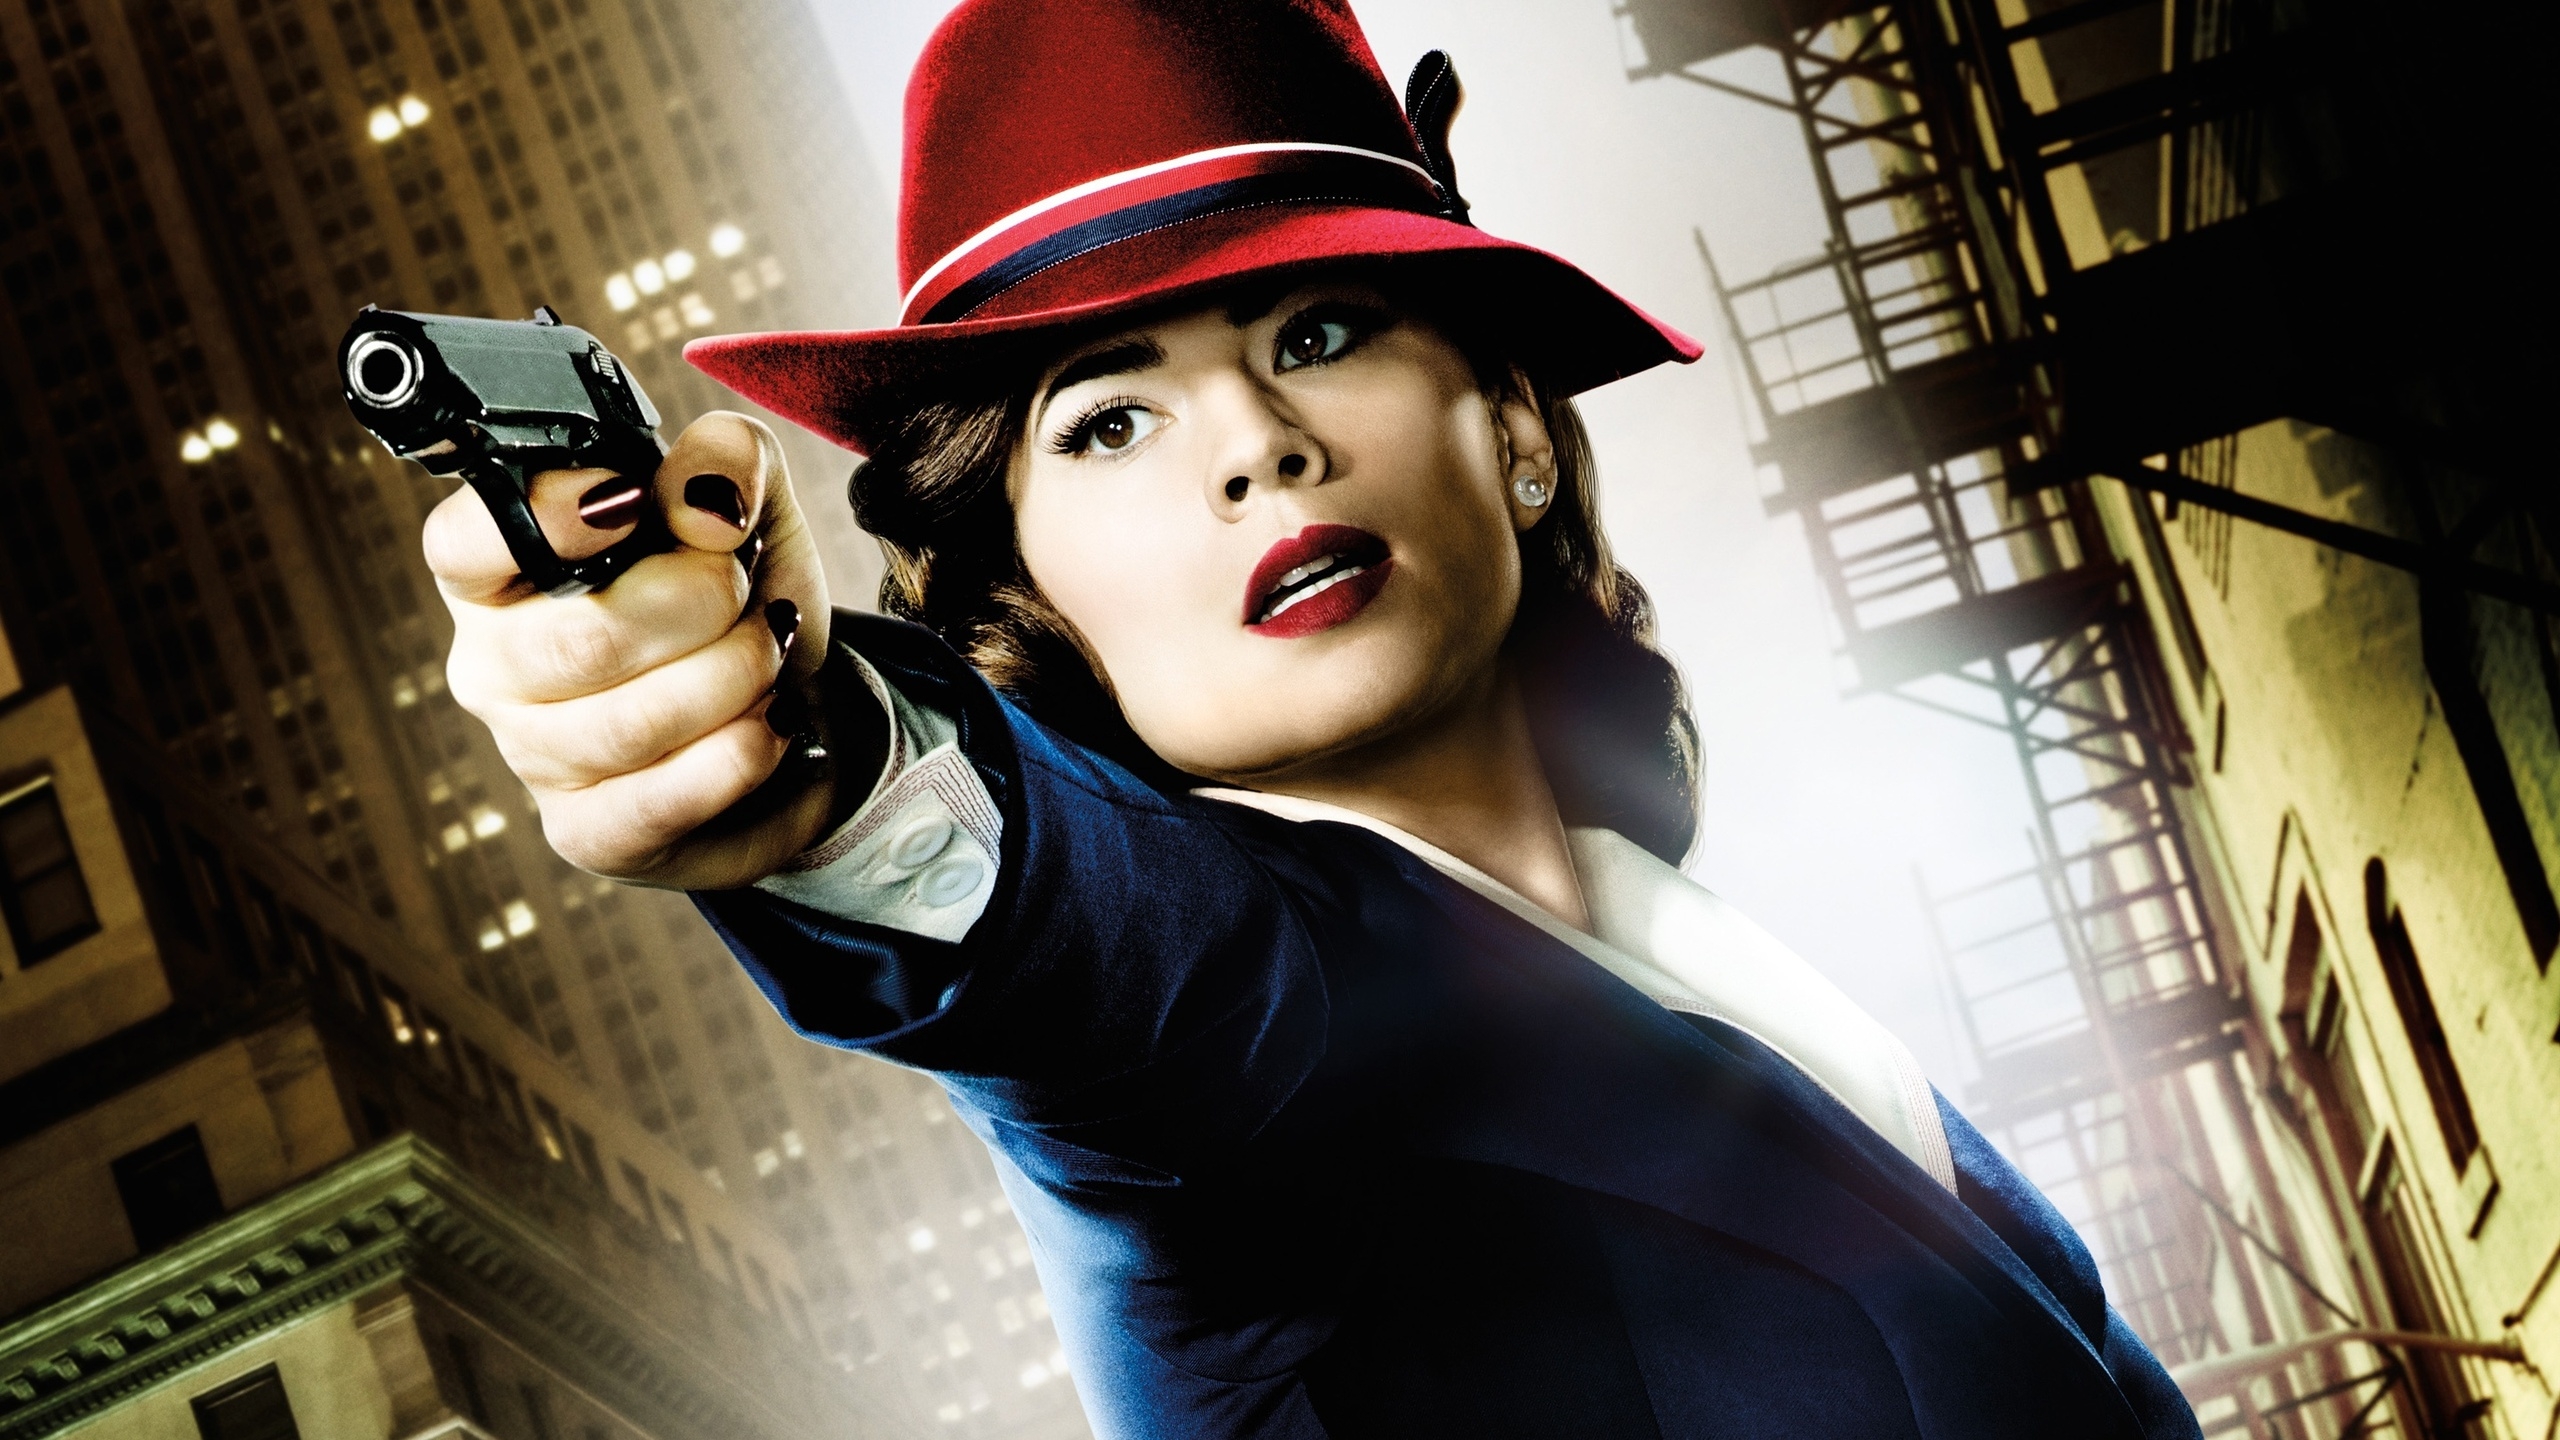 Agent Carter TV Show for 2560x1440 HDTV resolution